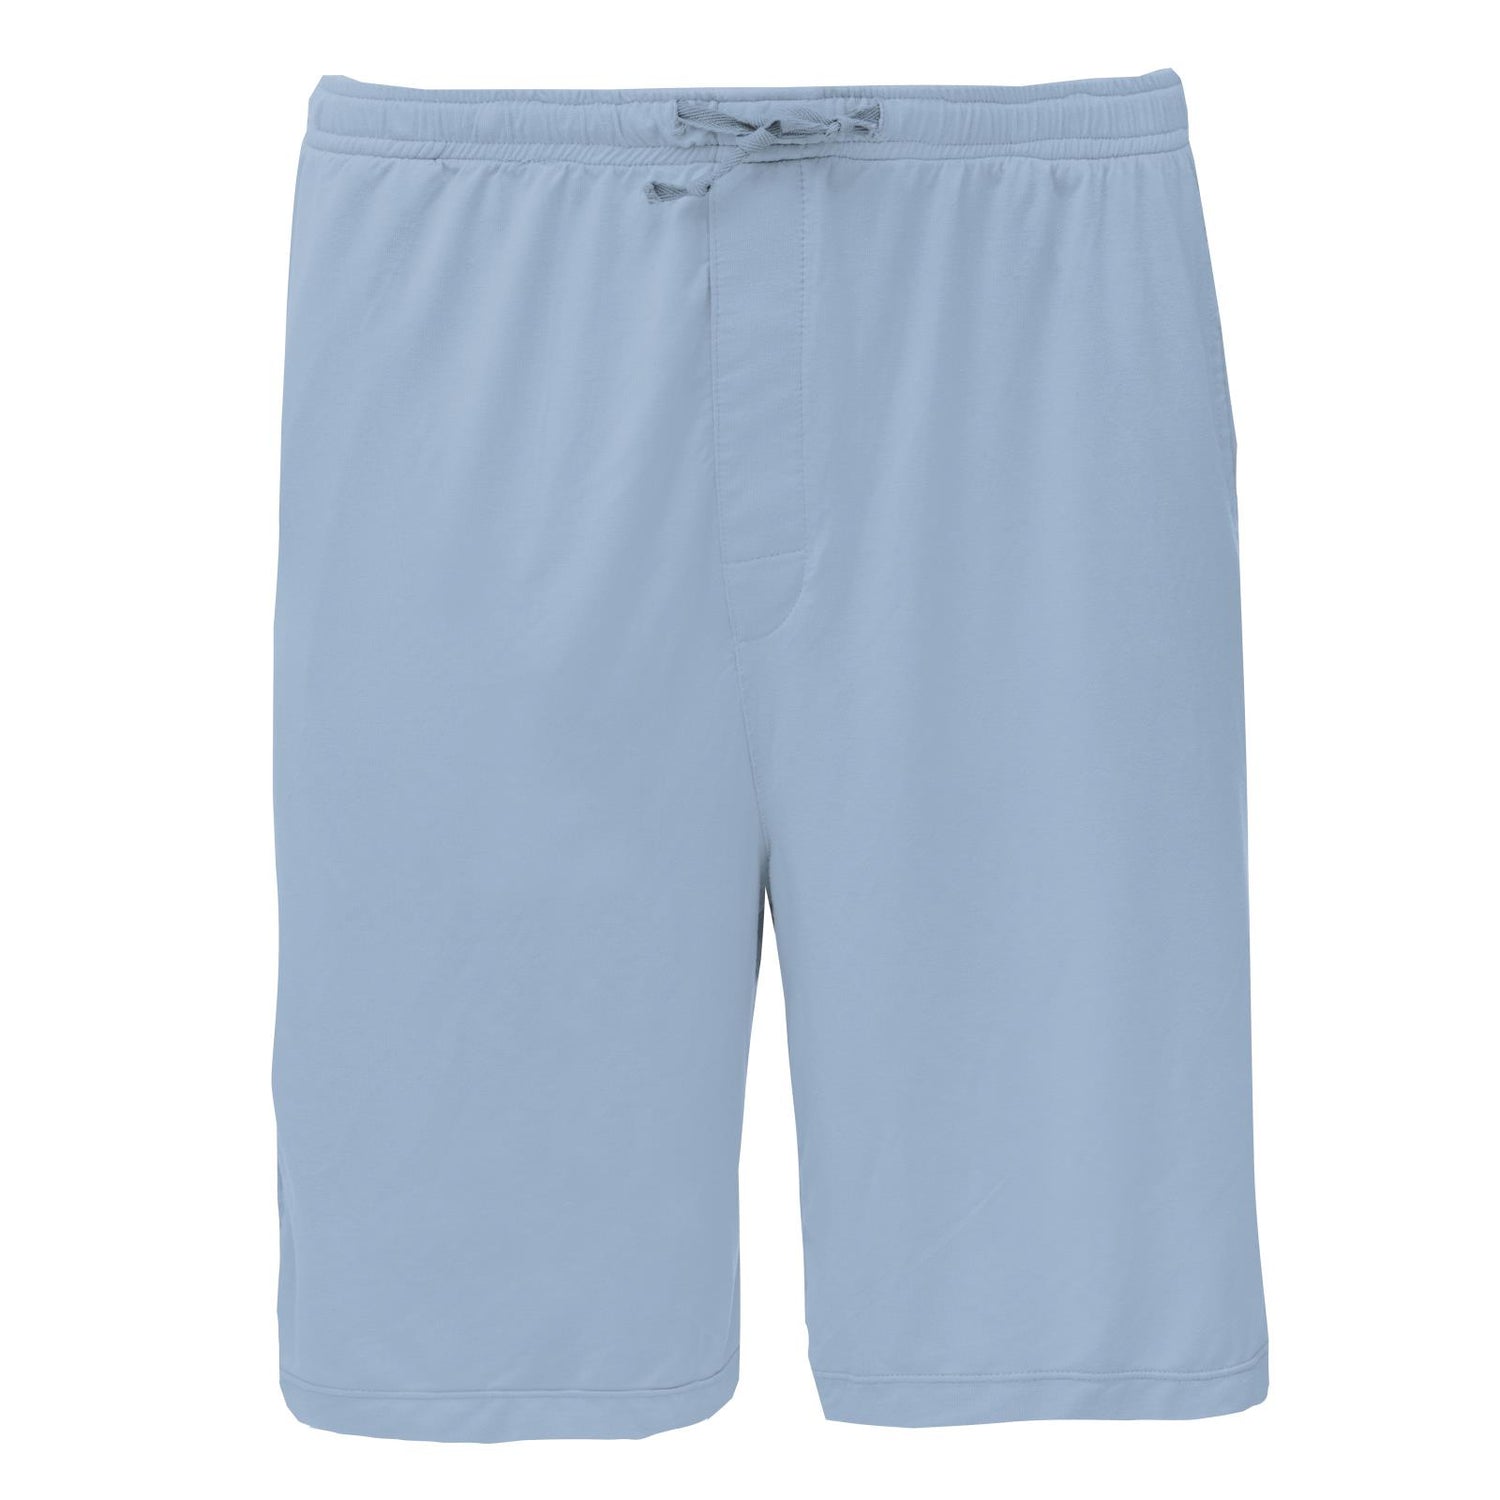 Men's Lounge Shorts in Pond